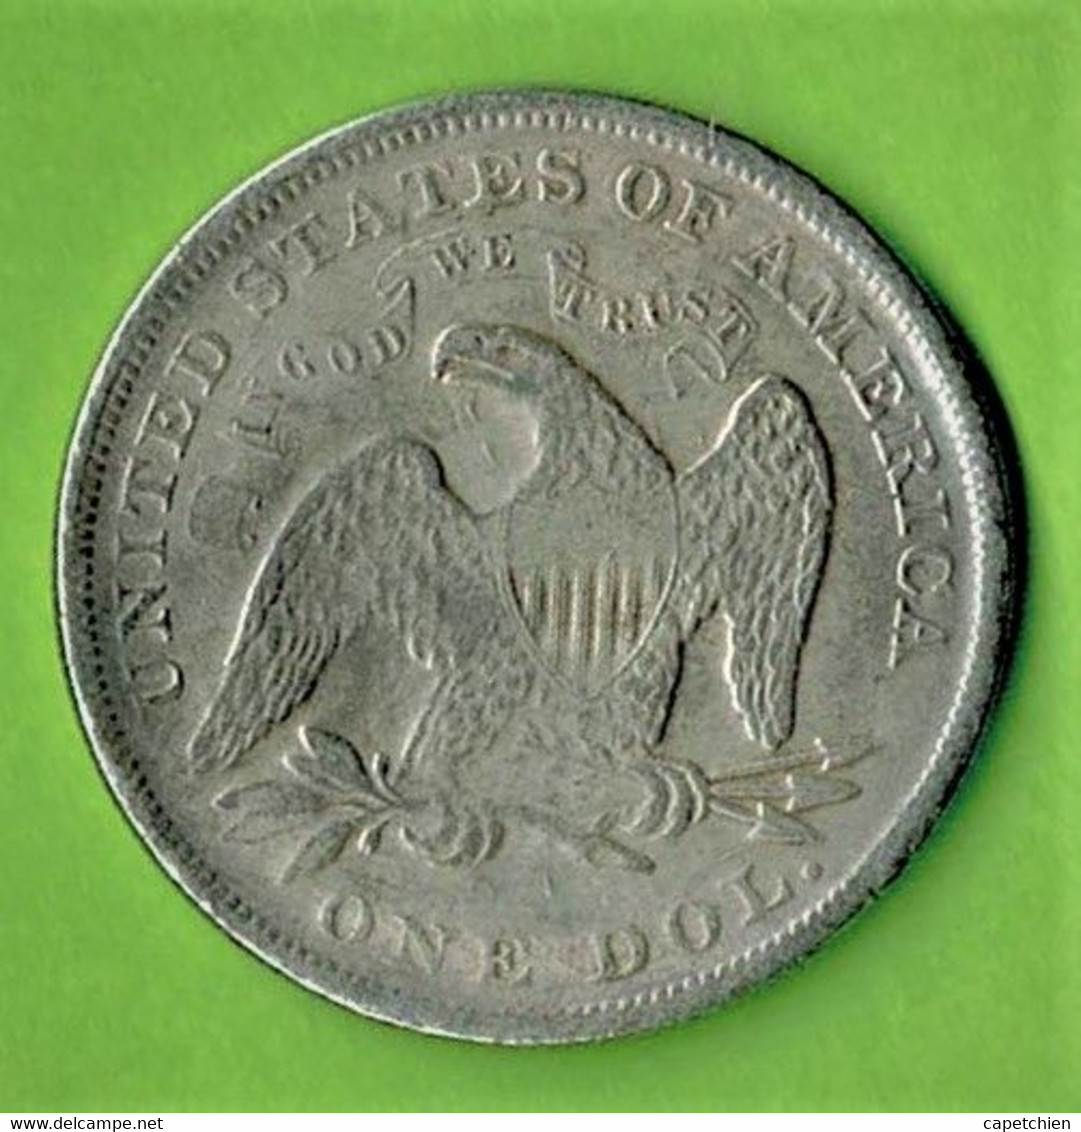 USA / 1 DOLLAR / 1840 / FAUX ( D'origine Asiatique ) ) FALSCHGELD / FAKE COIN - 1840-1873: Seated Liberty